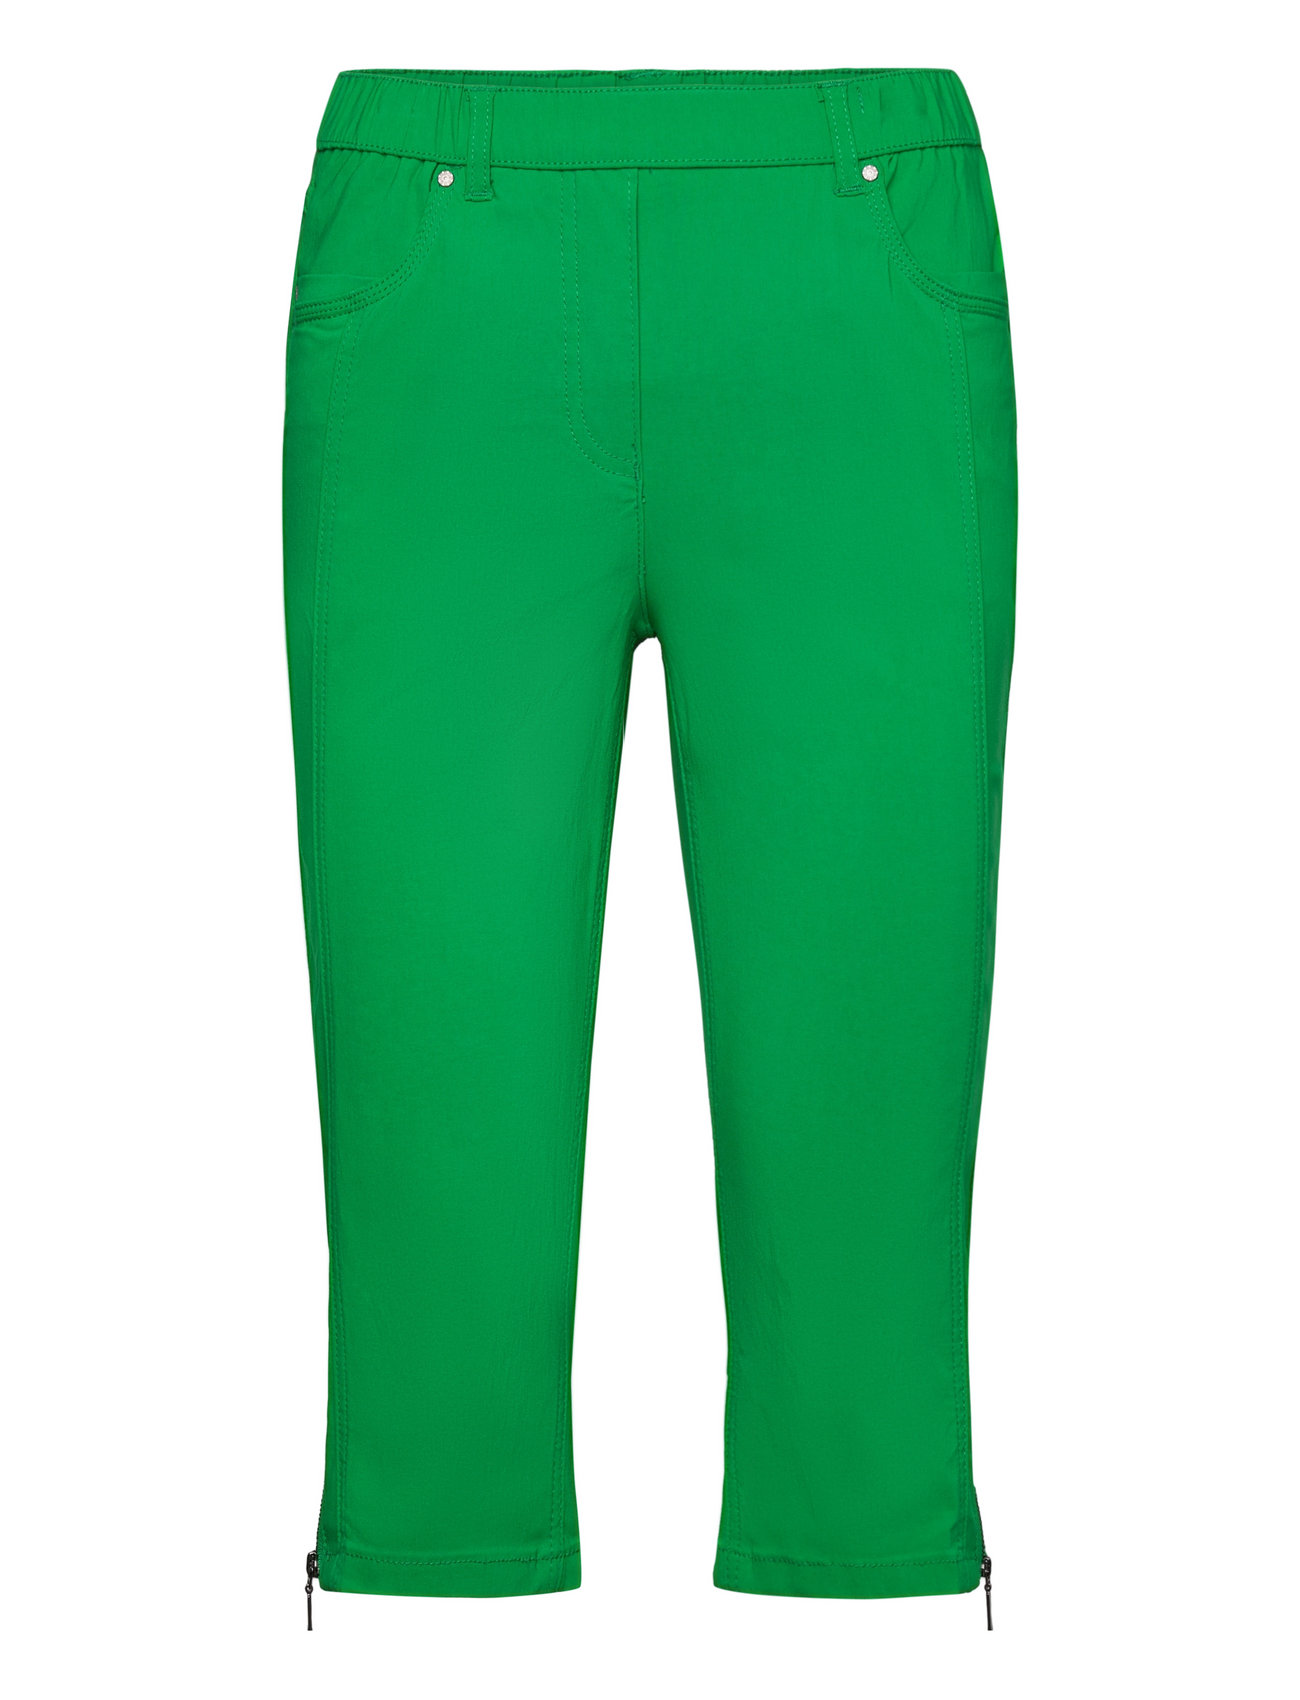 Brandtex Capri Pants (Bright Green), 305.97 kr Stort udvalg af | Booztlet.com